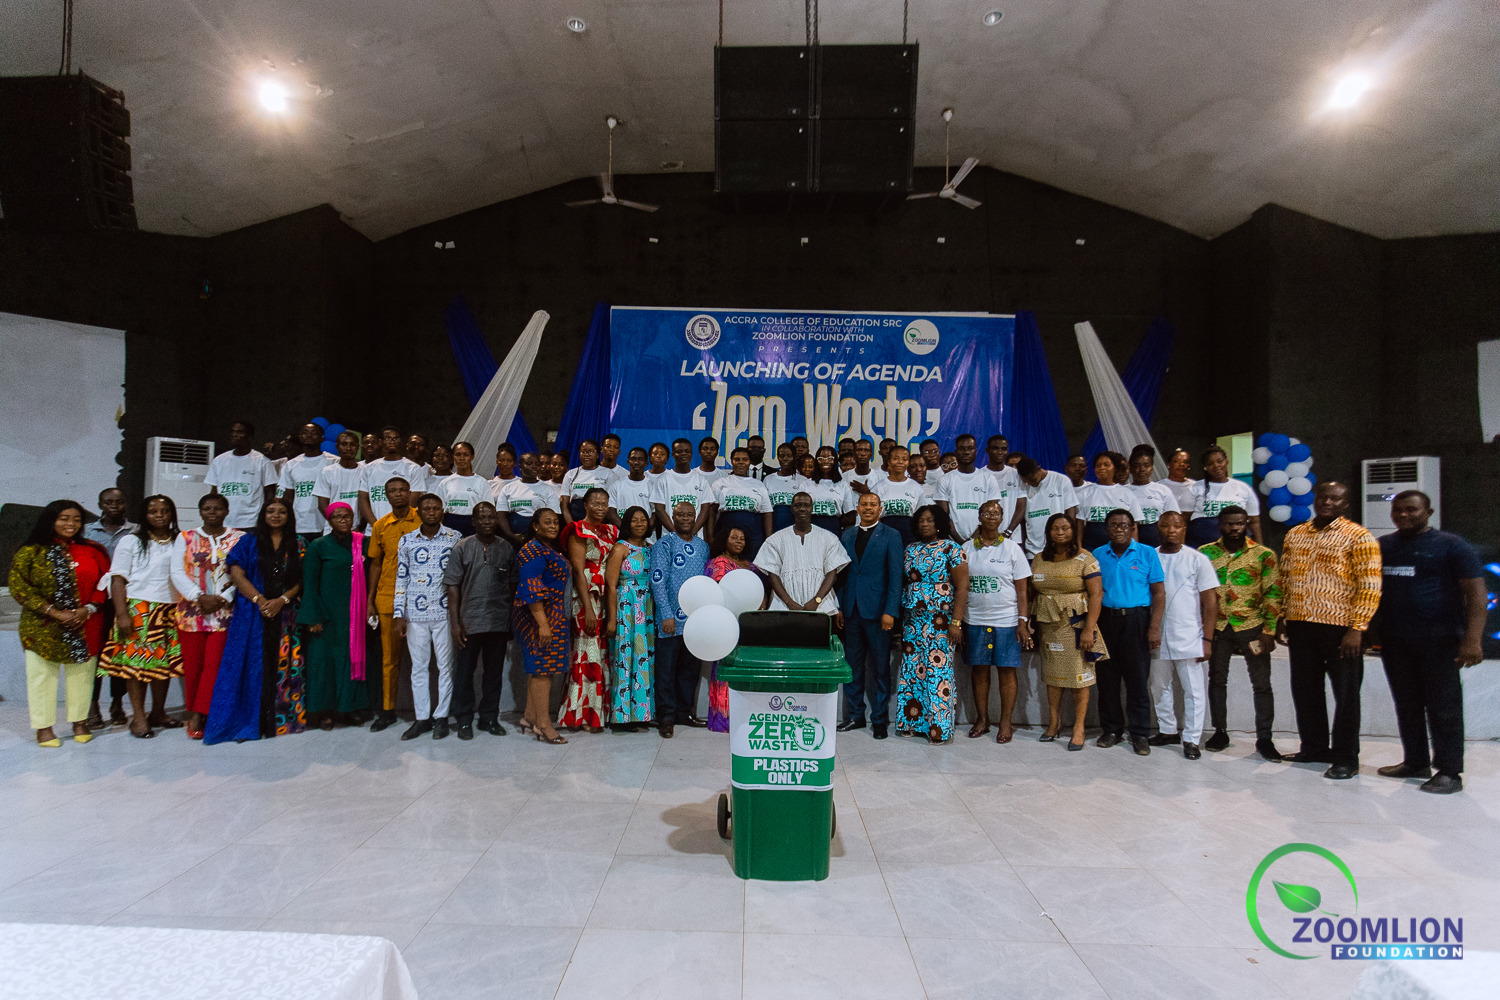 Zoomlion Foundation launches agenda ‘Zero Waste’, unveils Green Generation champions